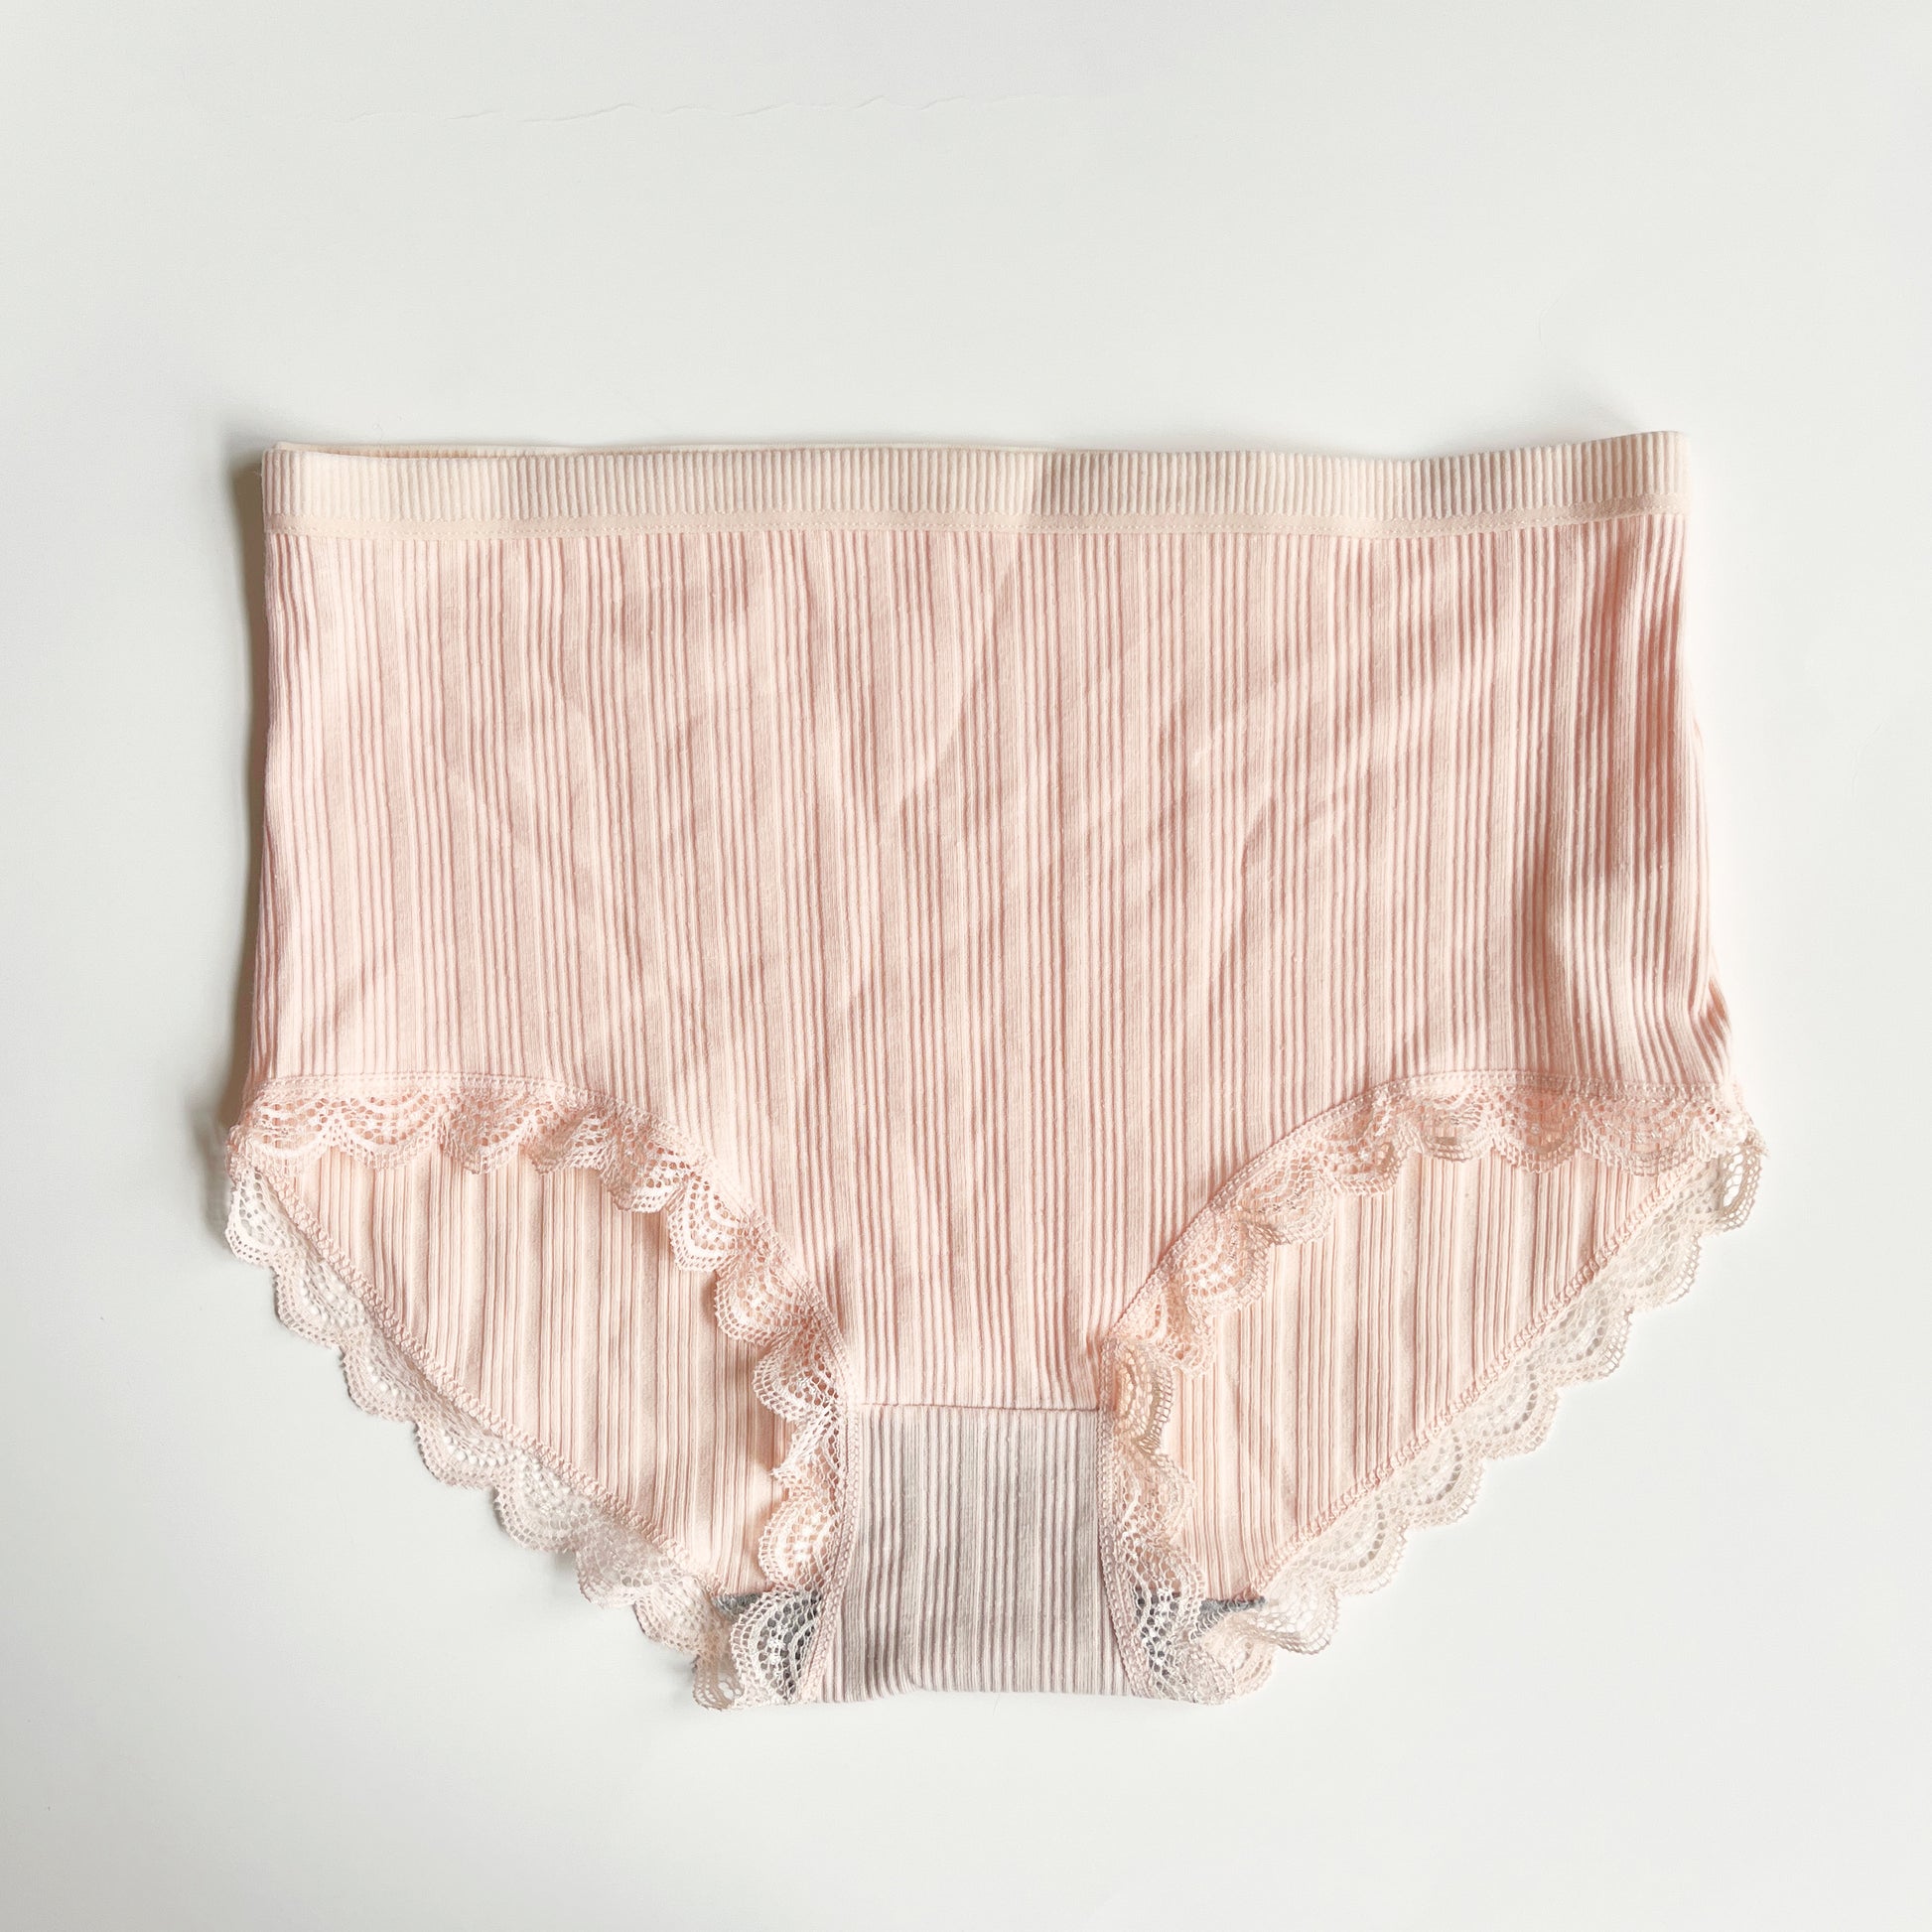 LBECLEY Open Gusset Panties Women Panties Lace Cutout Hollow Waist